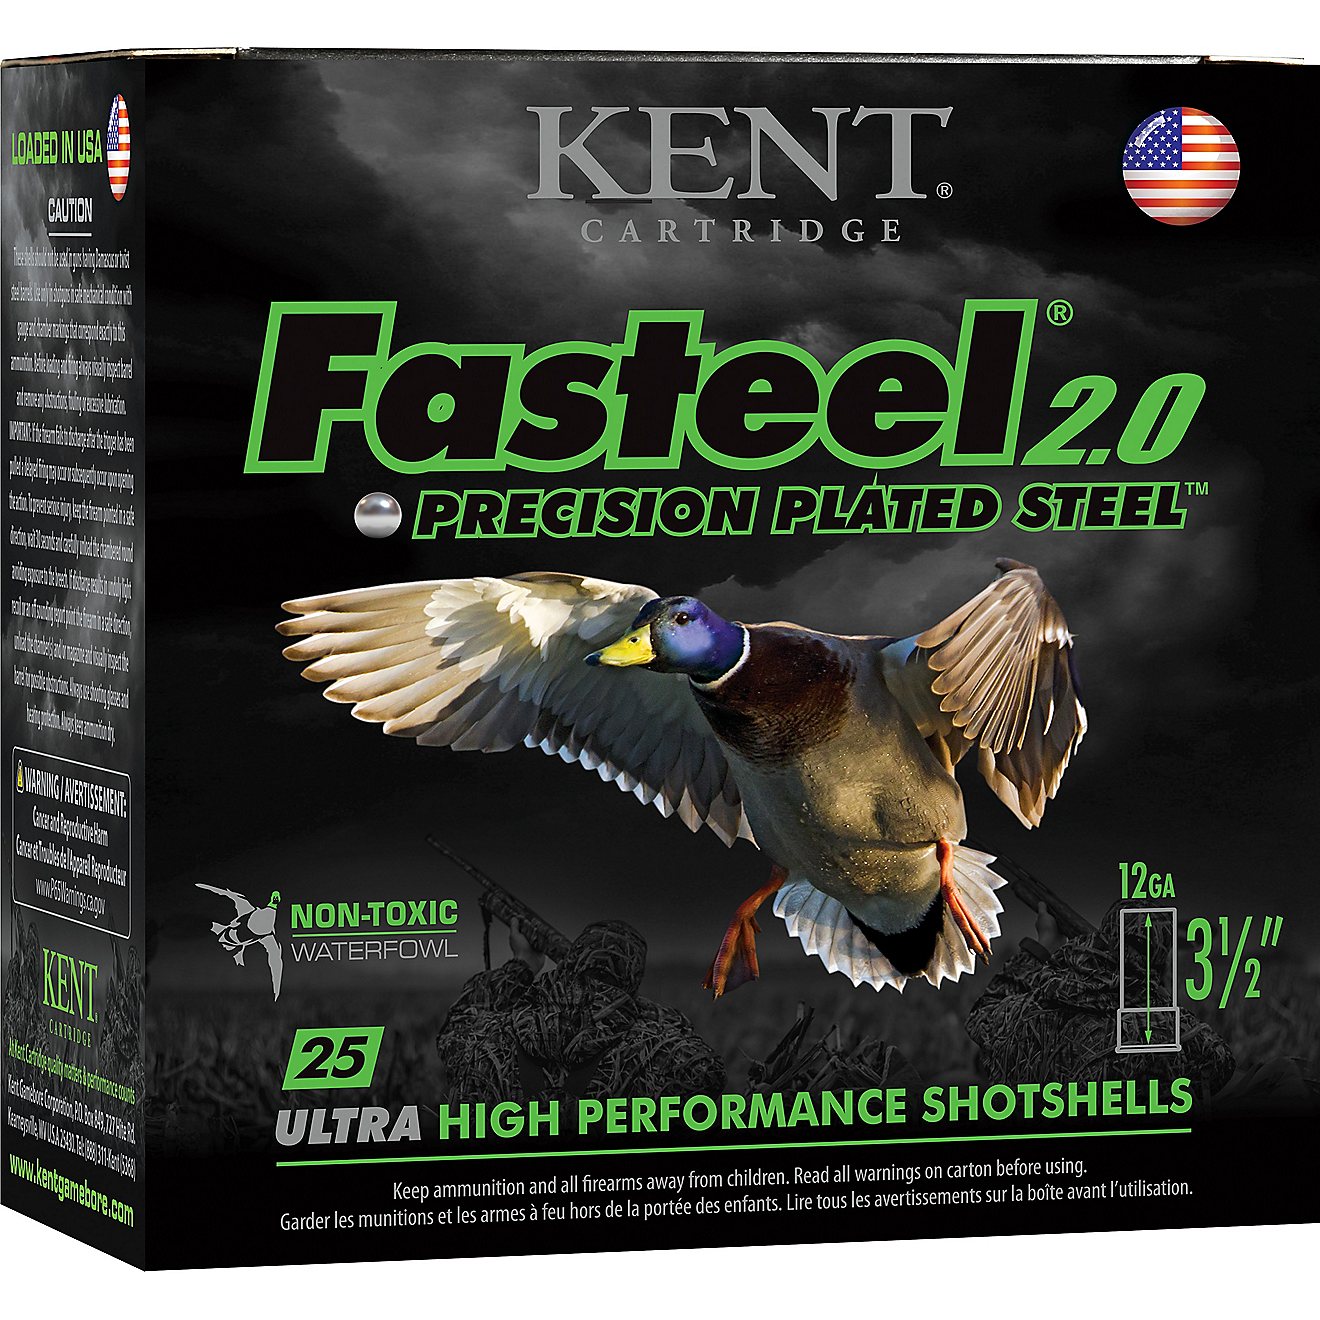 KENT Fasteel 2.0 Precision Plated Steel Waterfowl 12 Gauge Shotshells - 25 Rounds                                                - view number 1